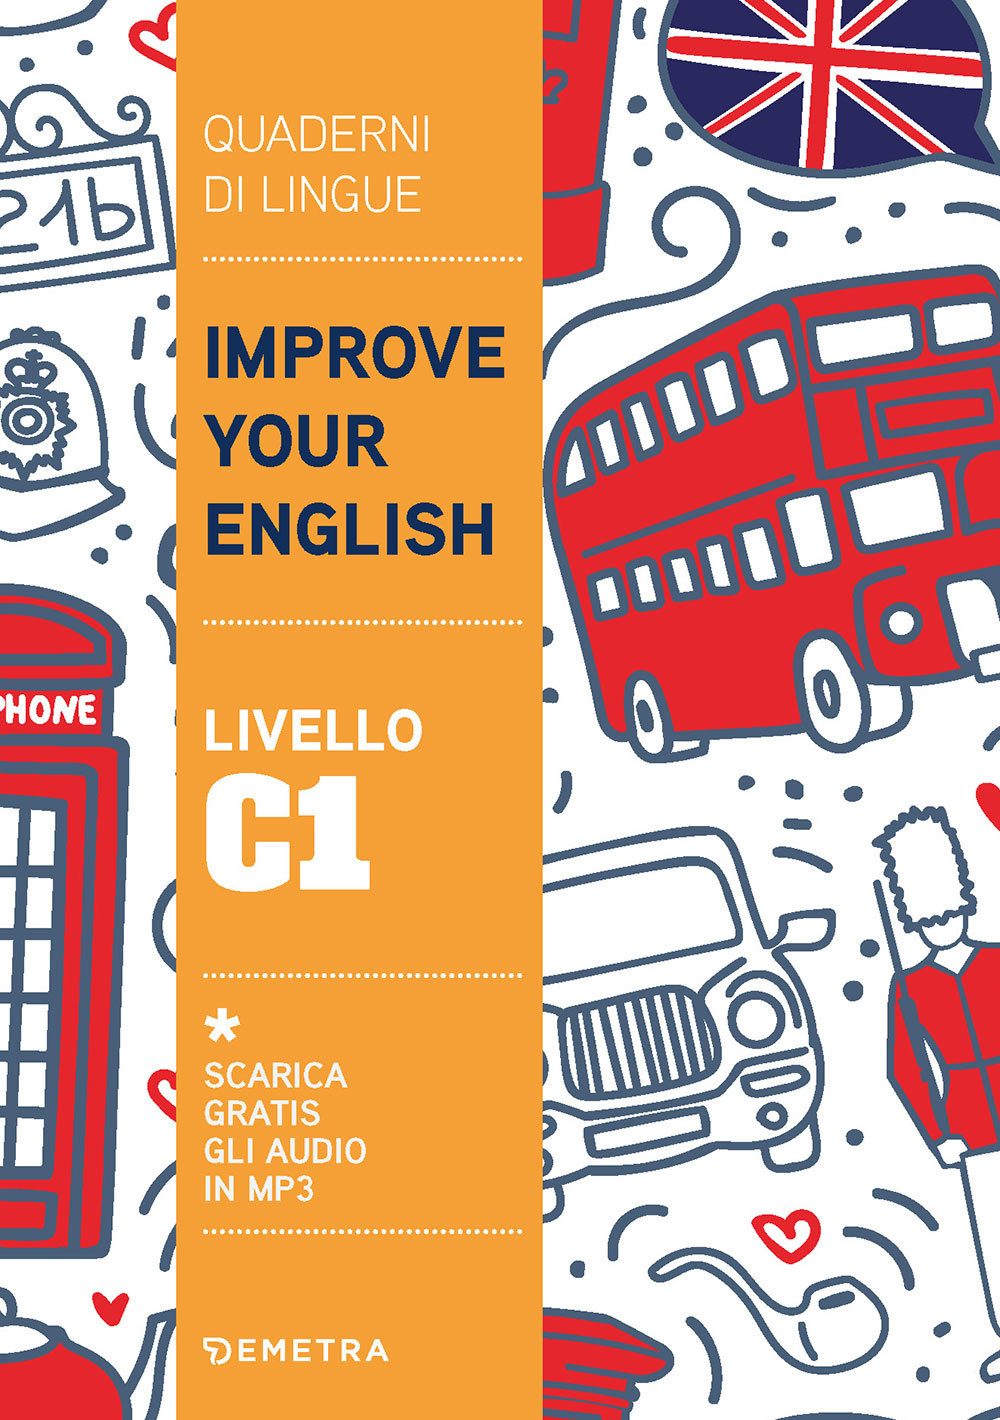 Improve Your English livello C1